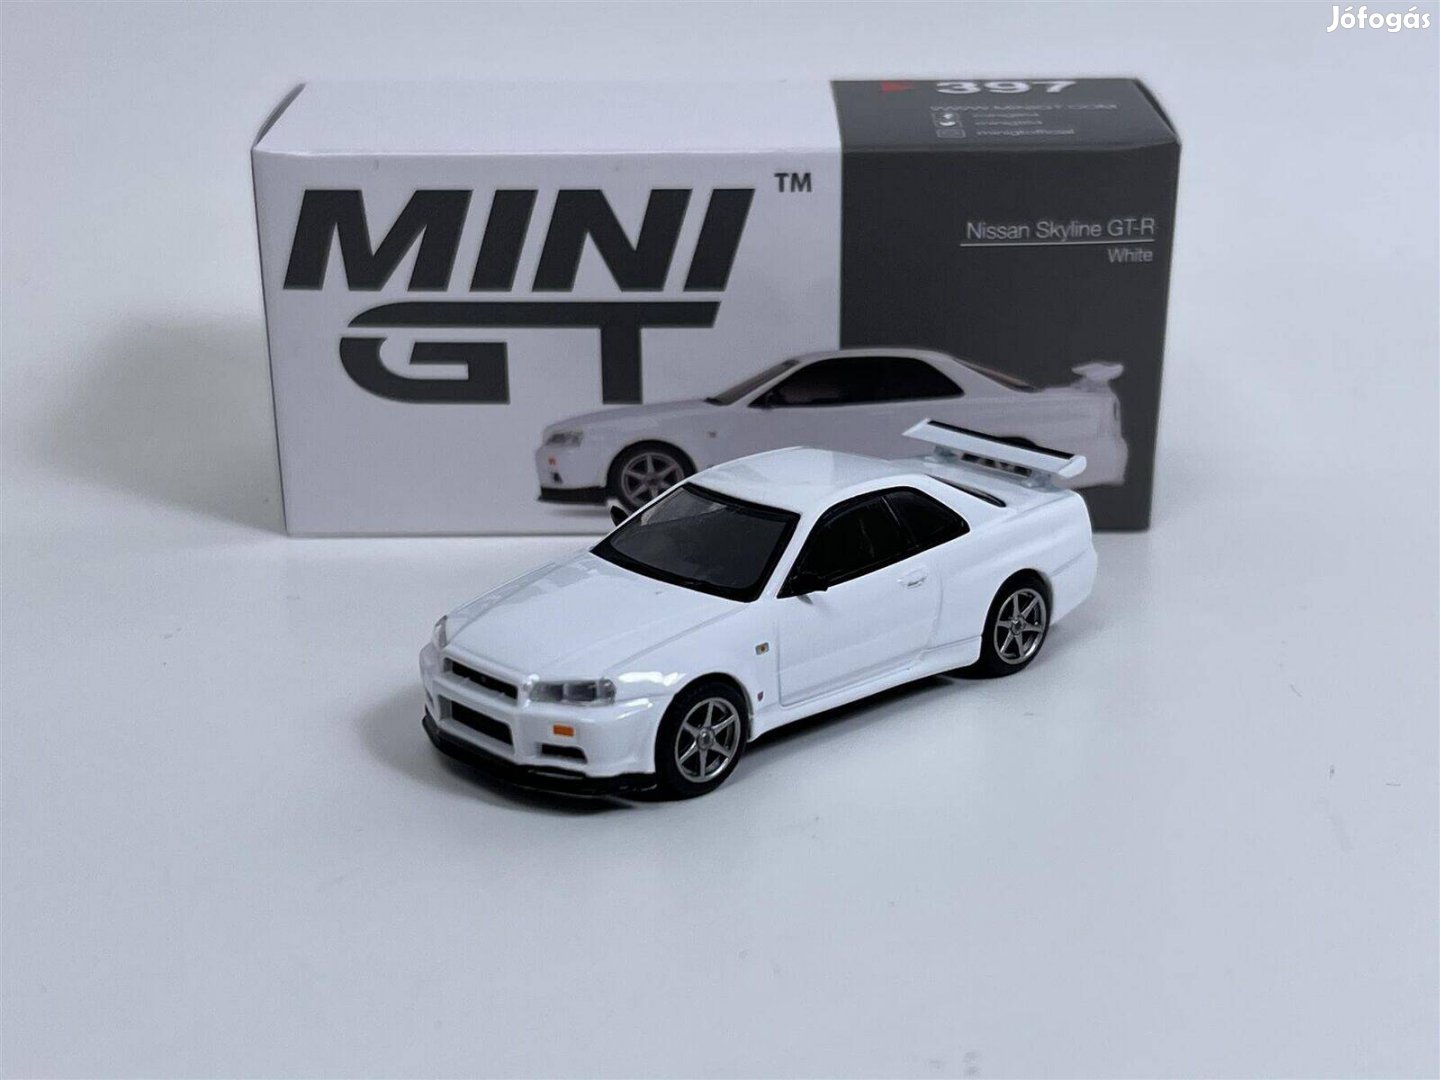 Mini GT MGT00397 Nissan Skyline GT-R (R34) V-Spec N1 White